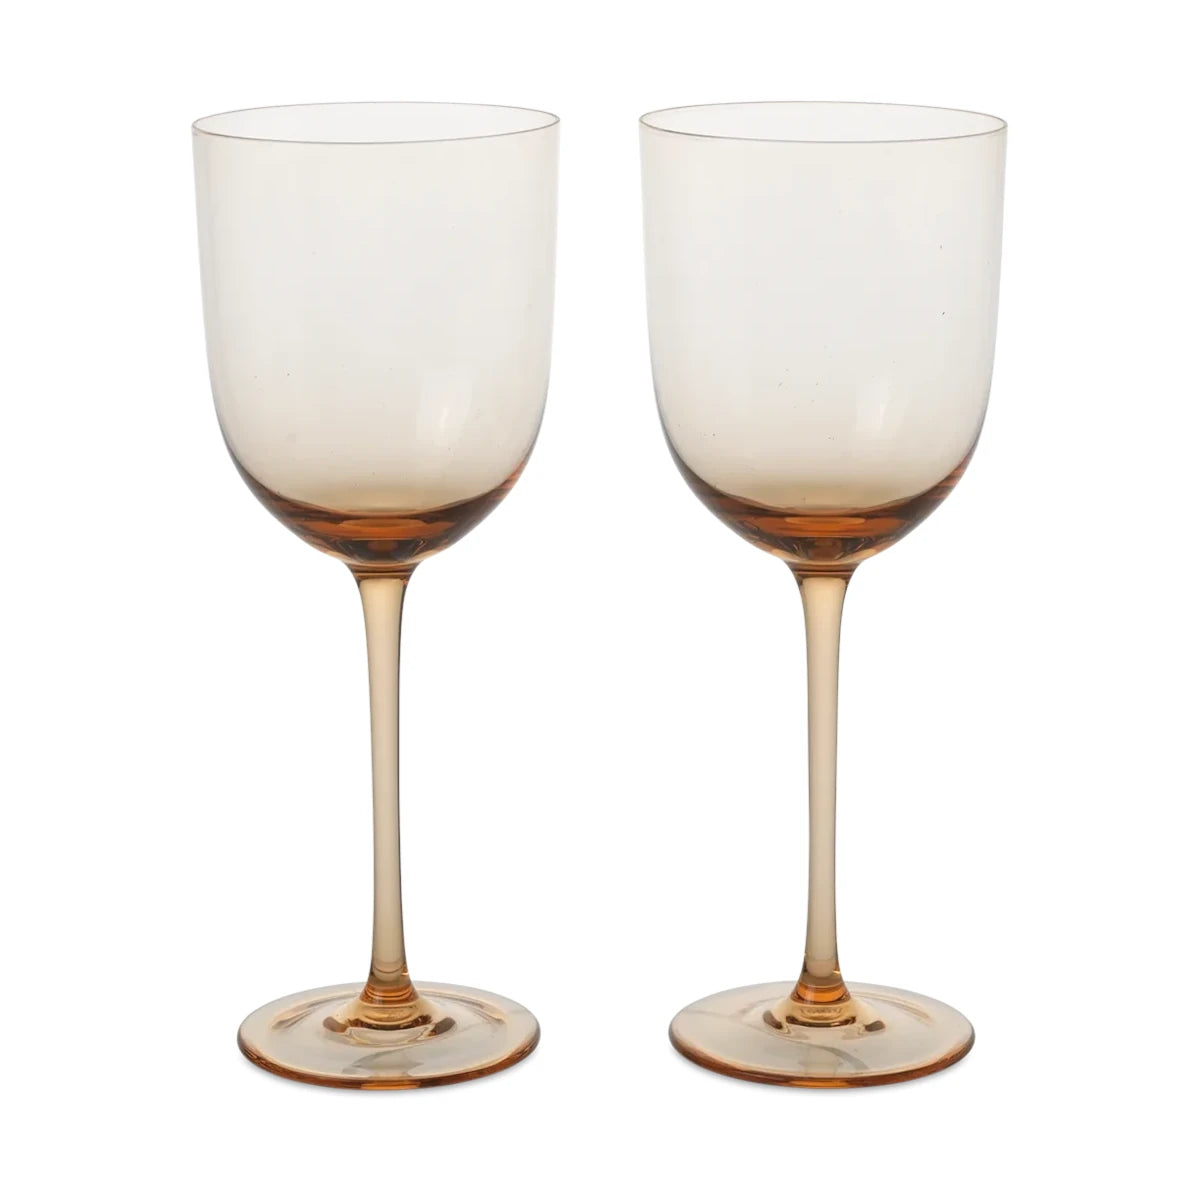 Host White Wine Glasses | Set of 2 | Blush | by ferm Living - Lifestory